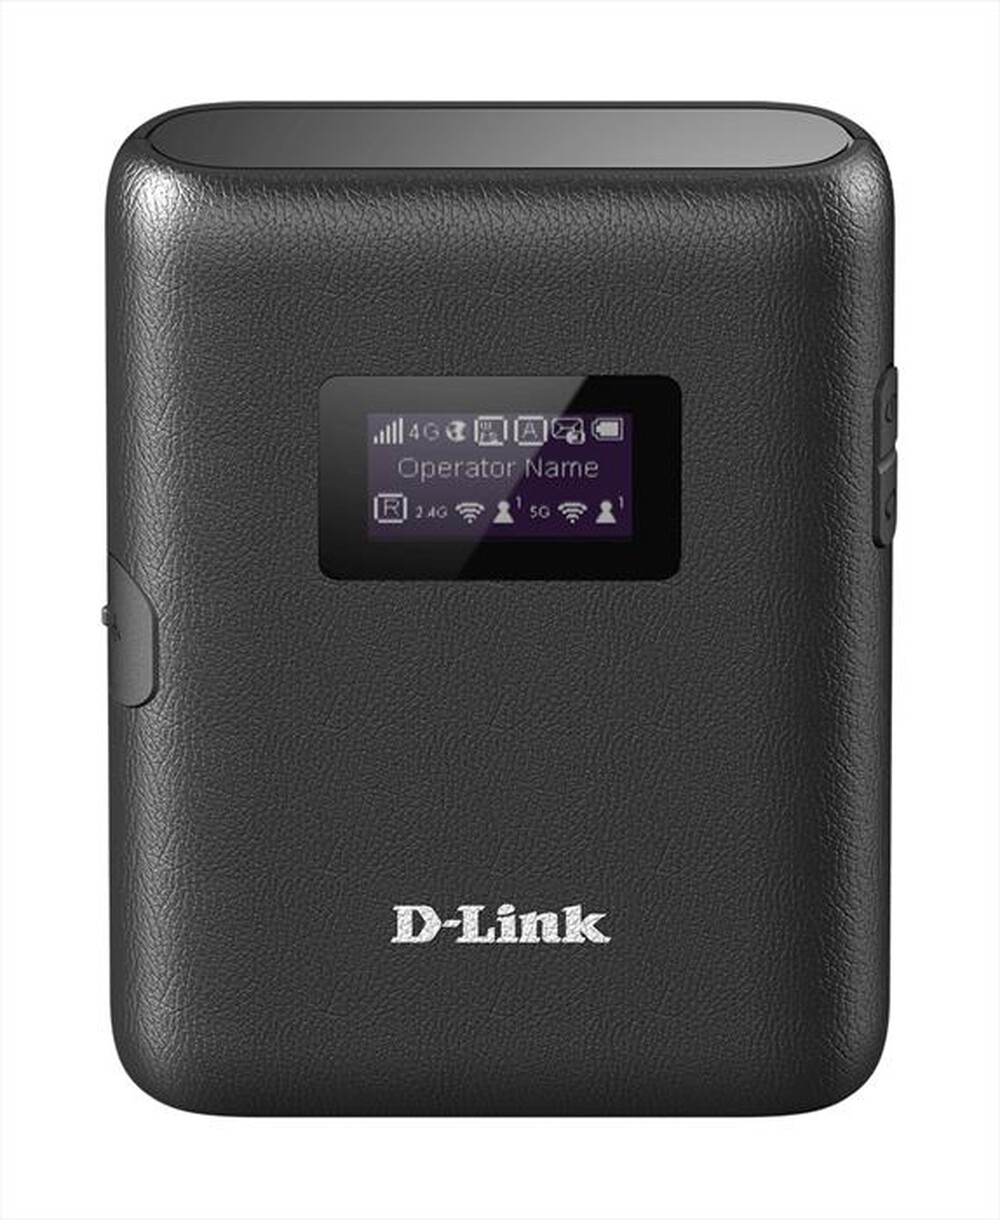 "D-LINK - DWR-933-nero"